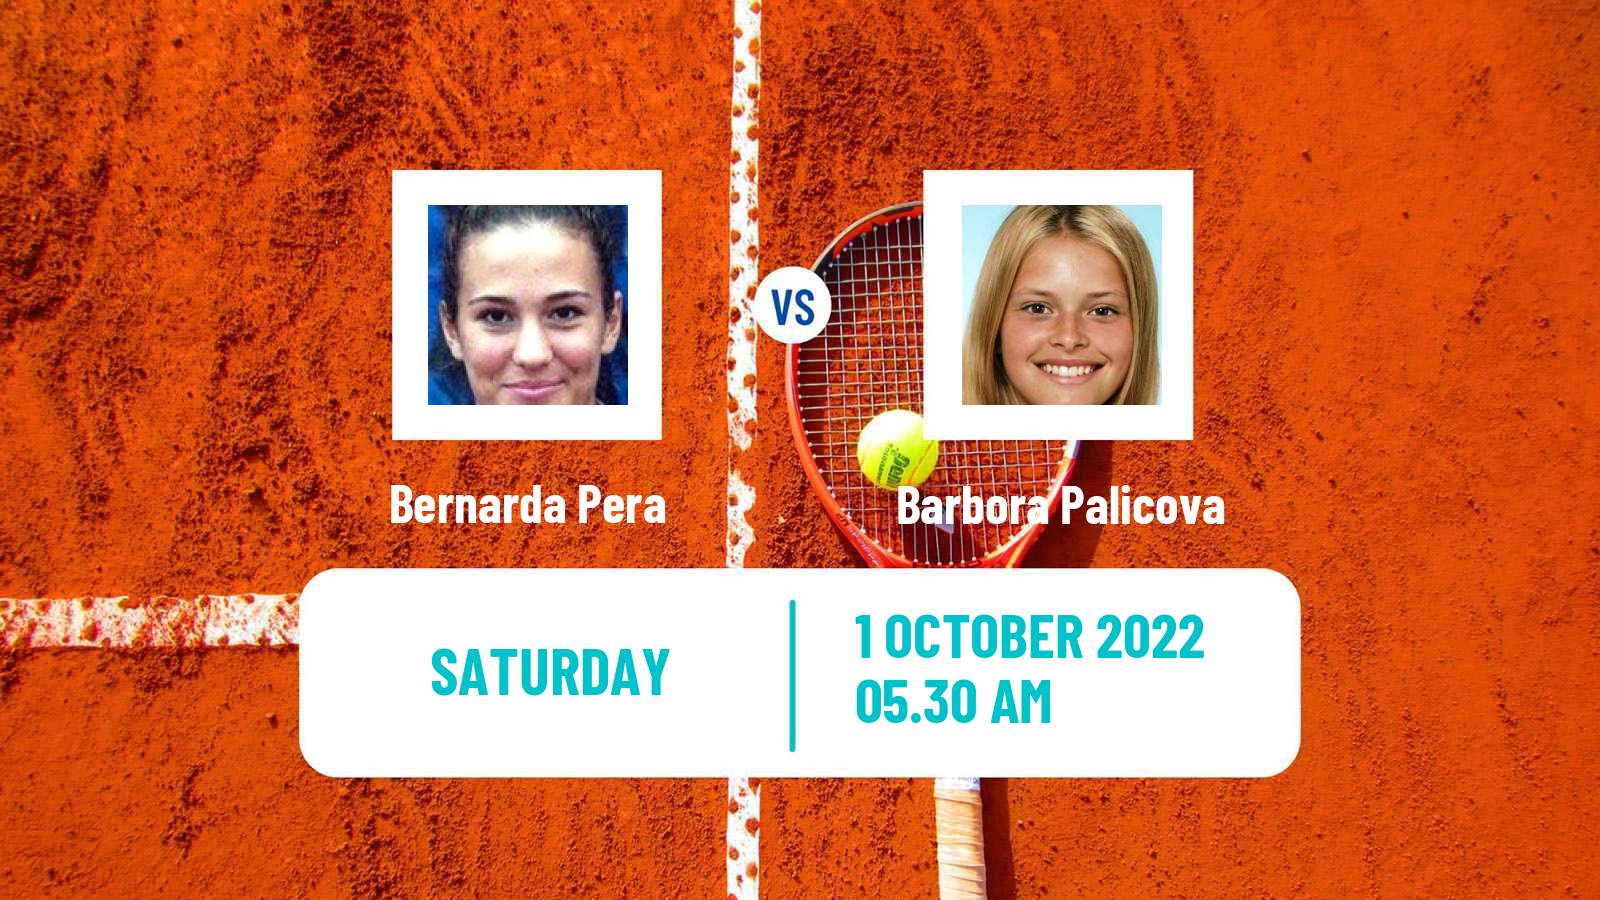 Tennis WTA Ostrava Bernarda Pera - Barbora Palicova